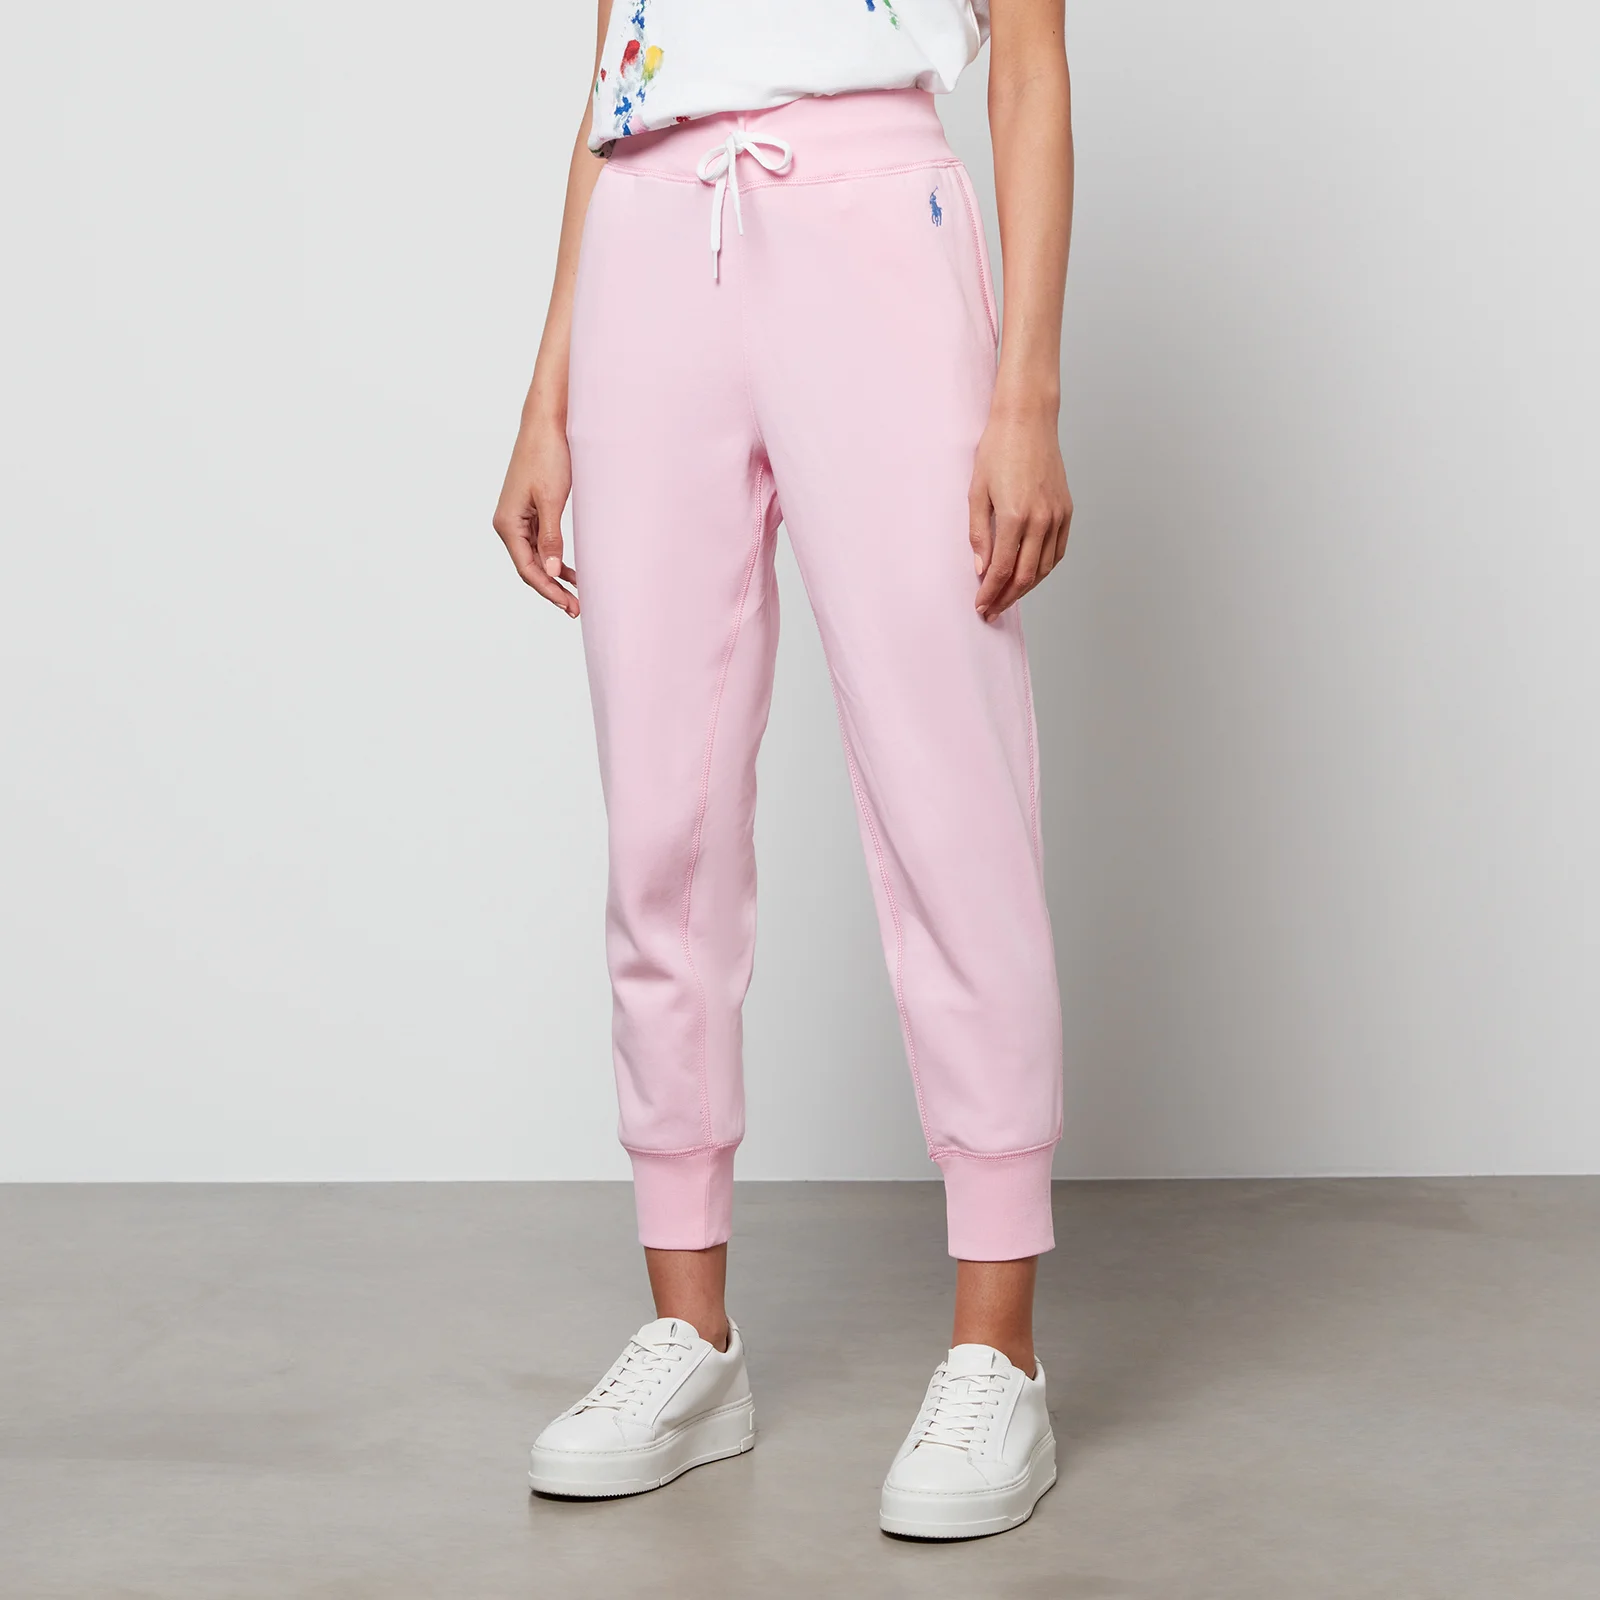 Polo Ralph Lauren Women's Logo Sweatpants - Carmel Pink Image 1